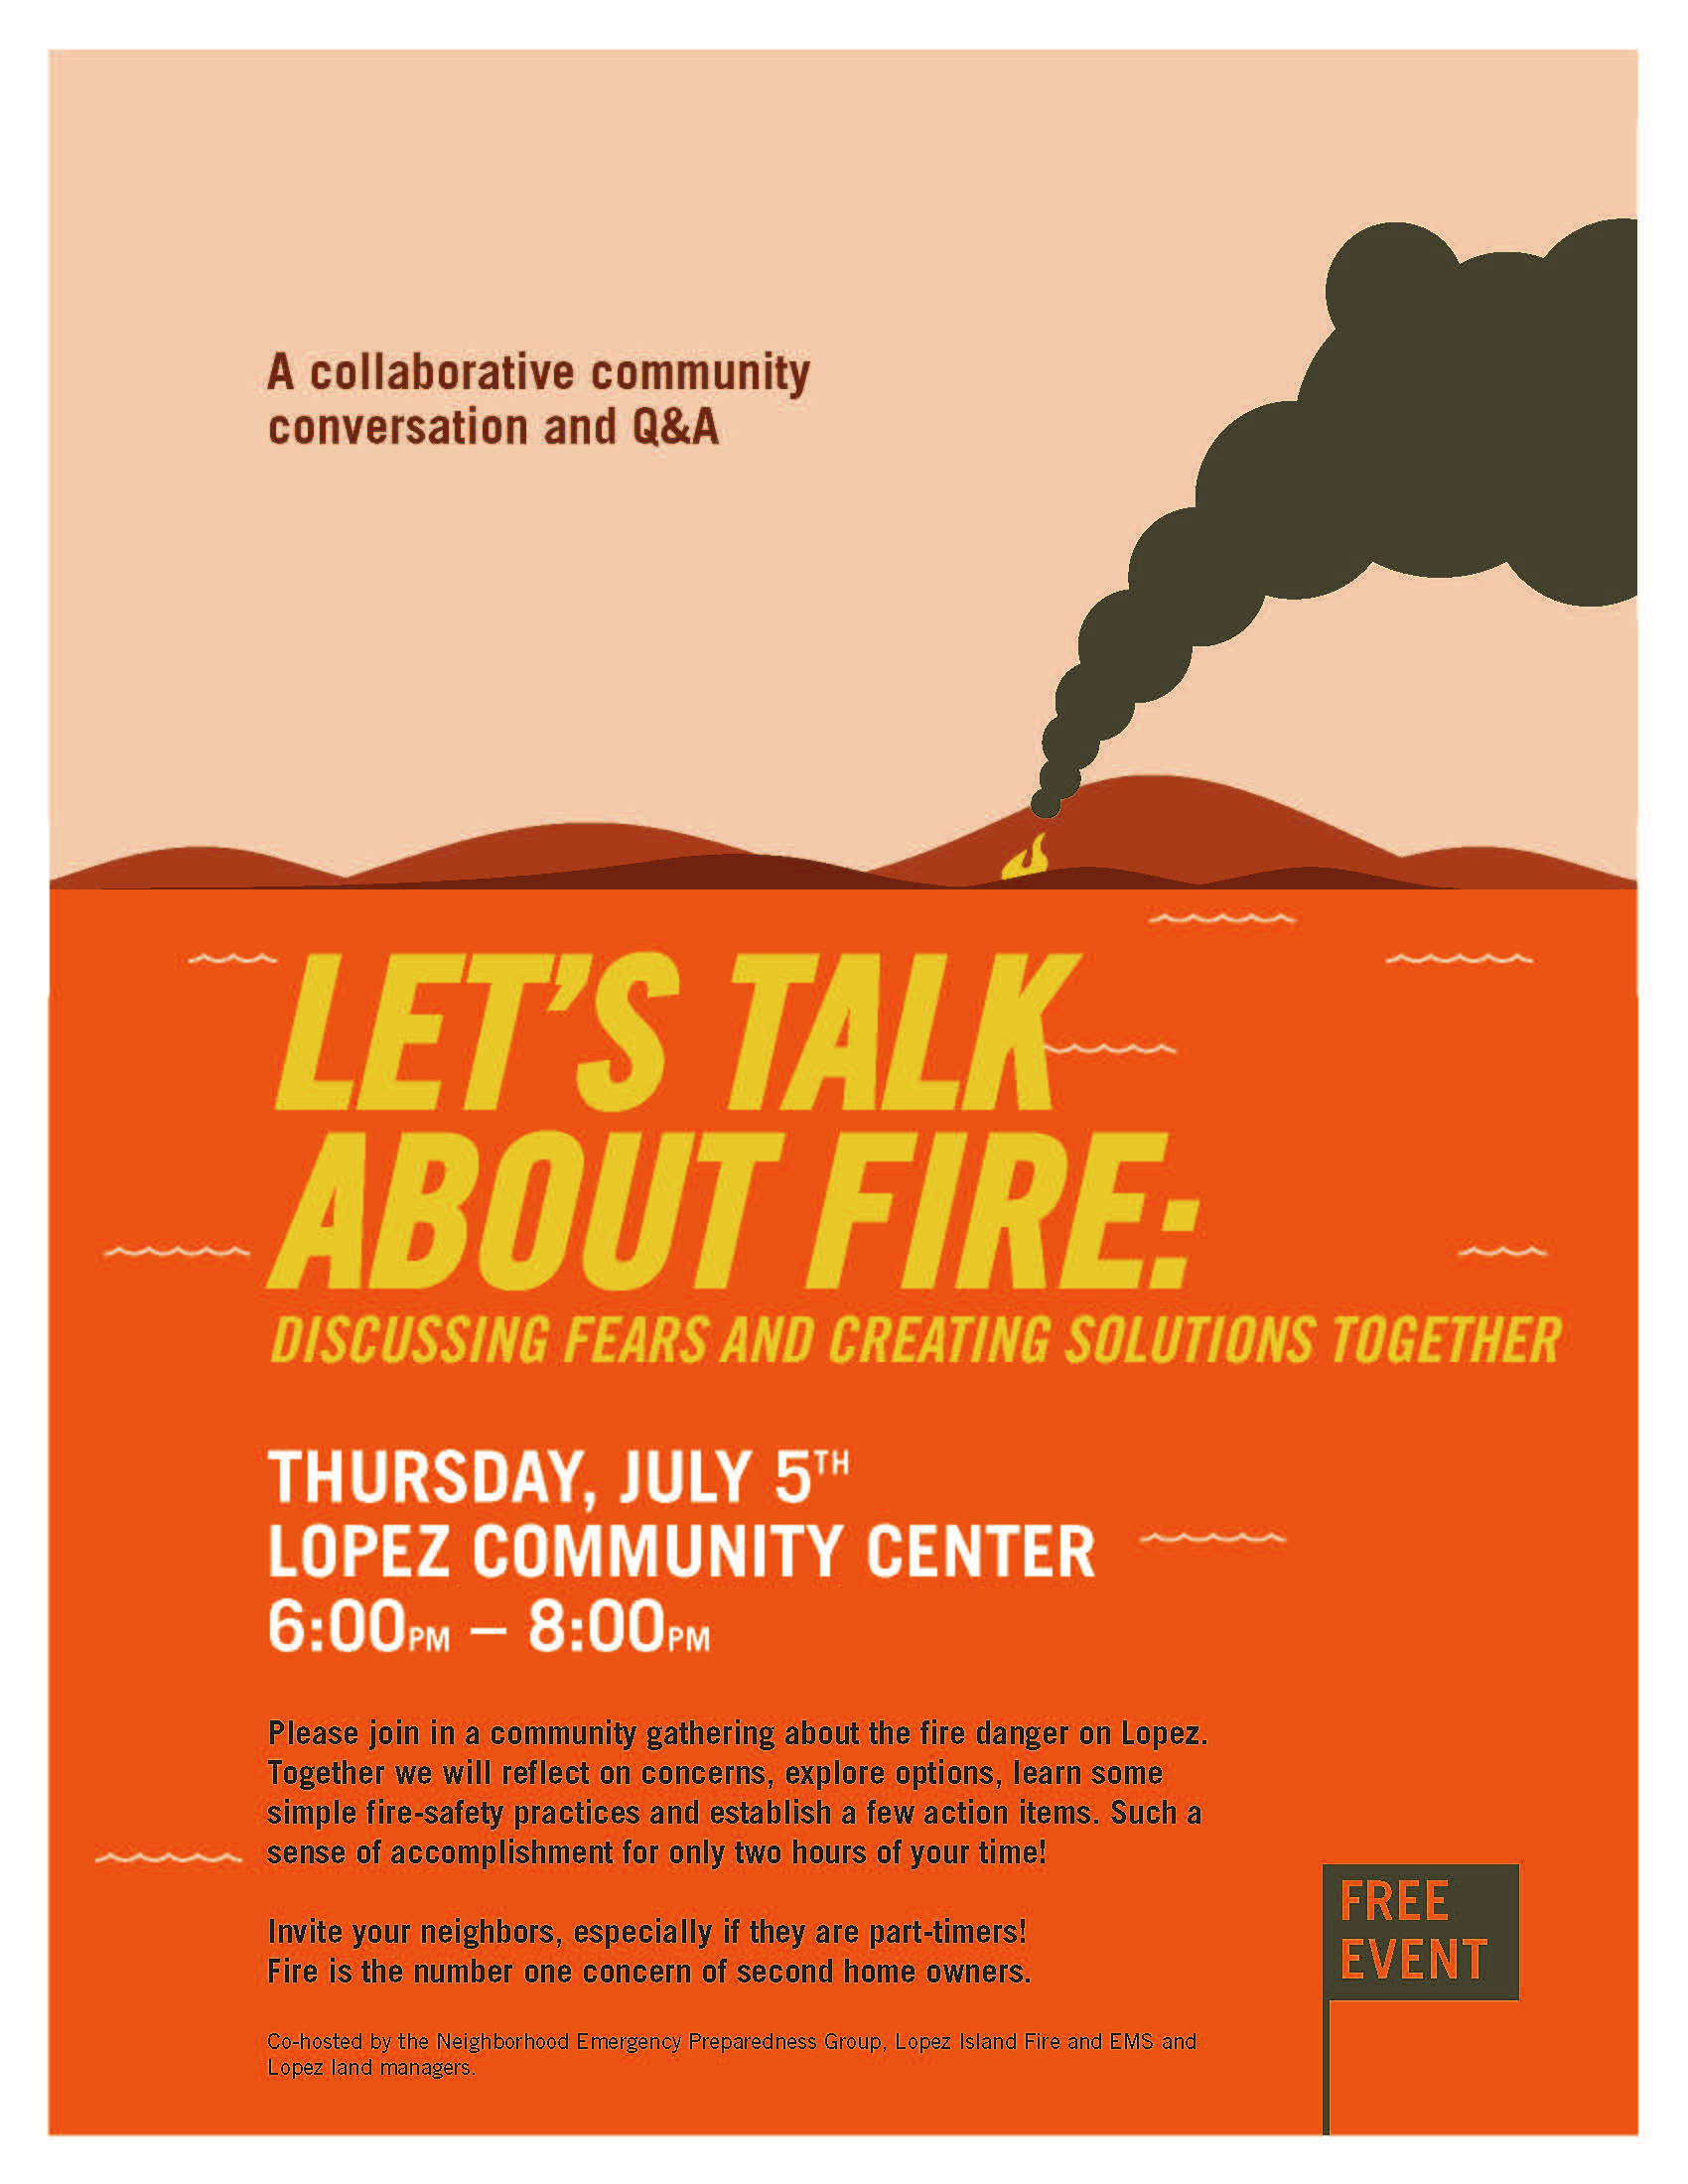 Learn about fire danger on Lopez